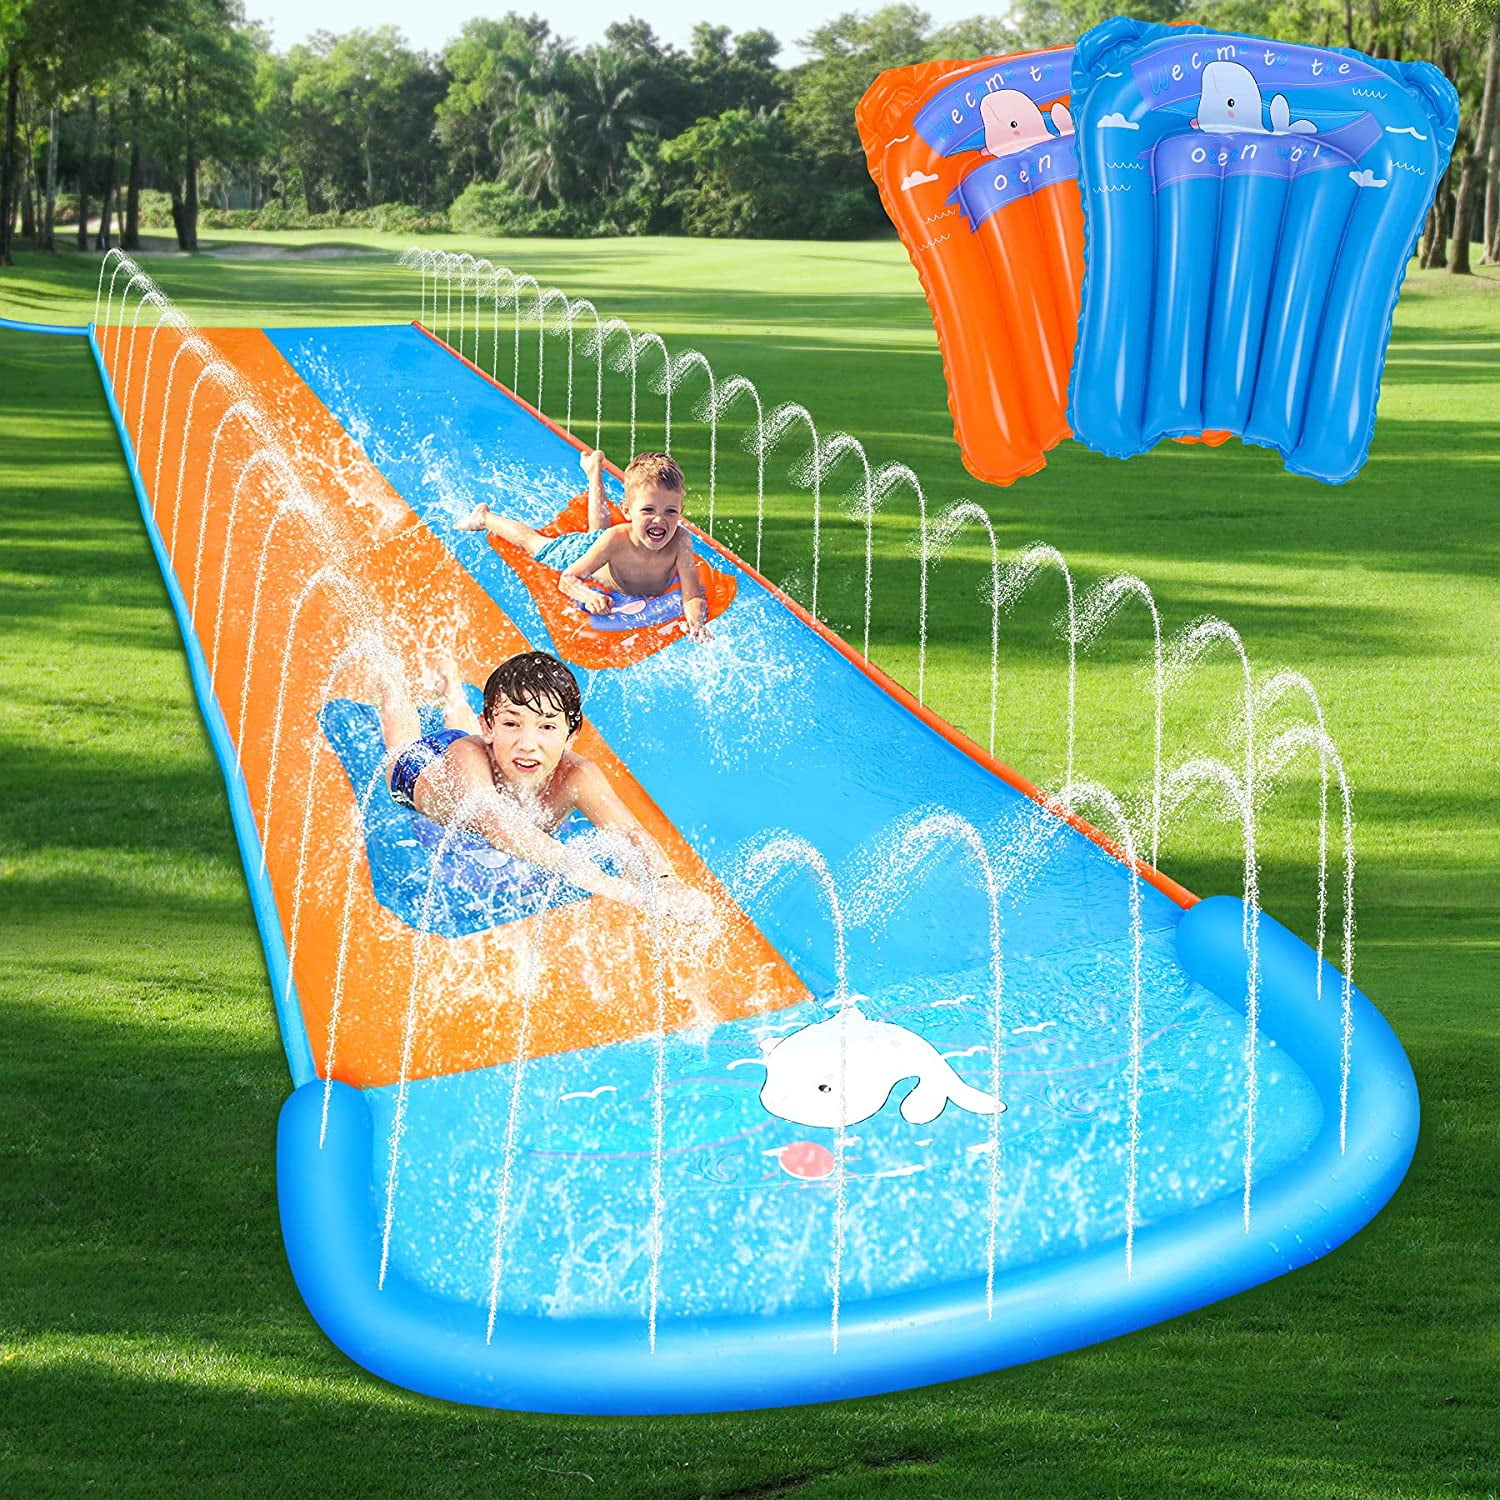 Water Slide for Backyard Outdoor Kids Toys Games Slip and Slide Water Slide for Kids and Adults Build in Splash Sprinklers 16FT Long Giant Adult Slip and Slide for Outside with 2 Surfboards 